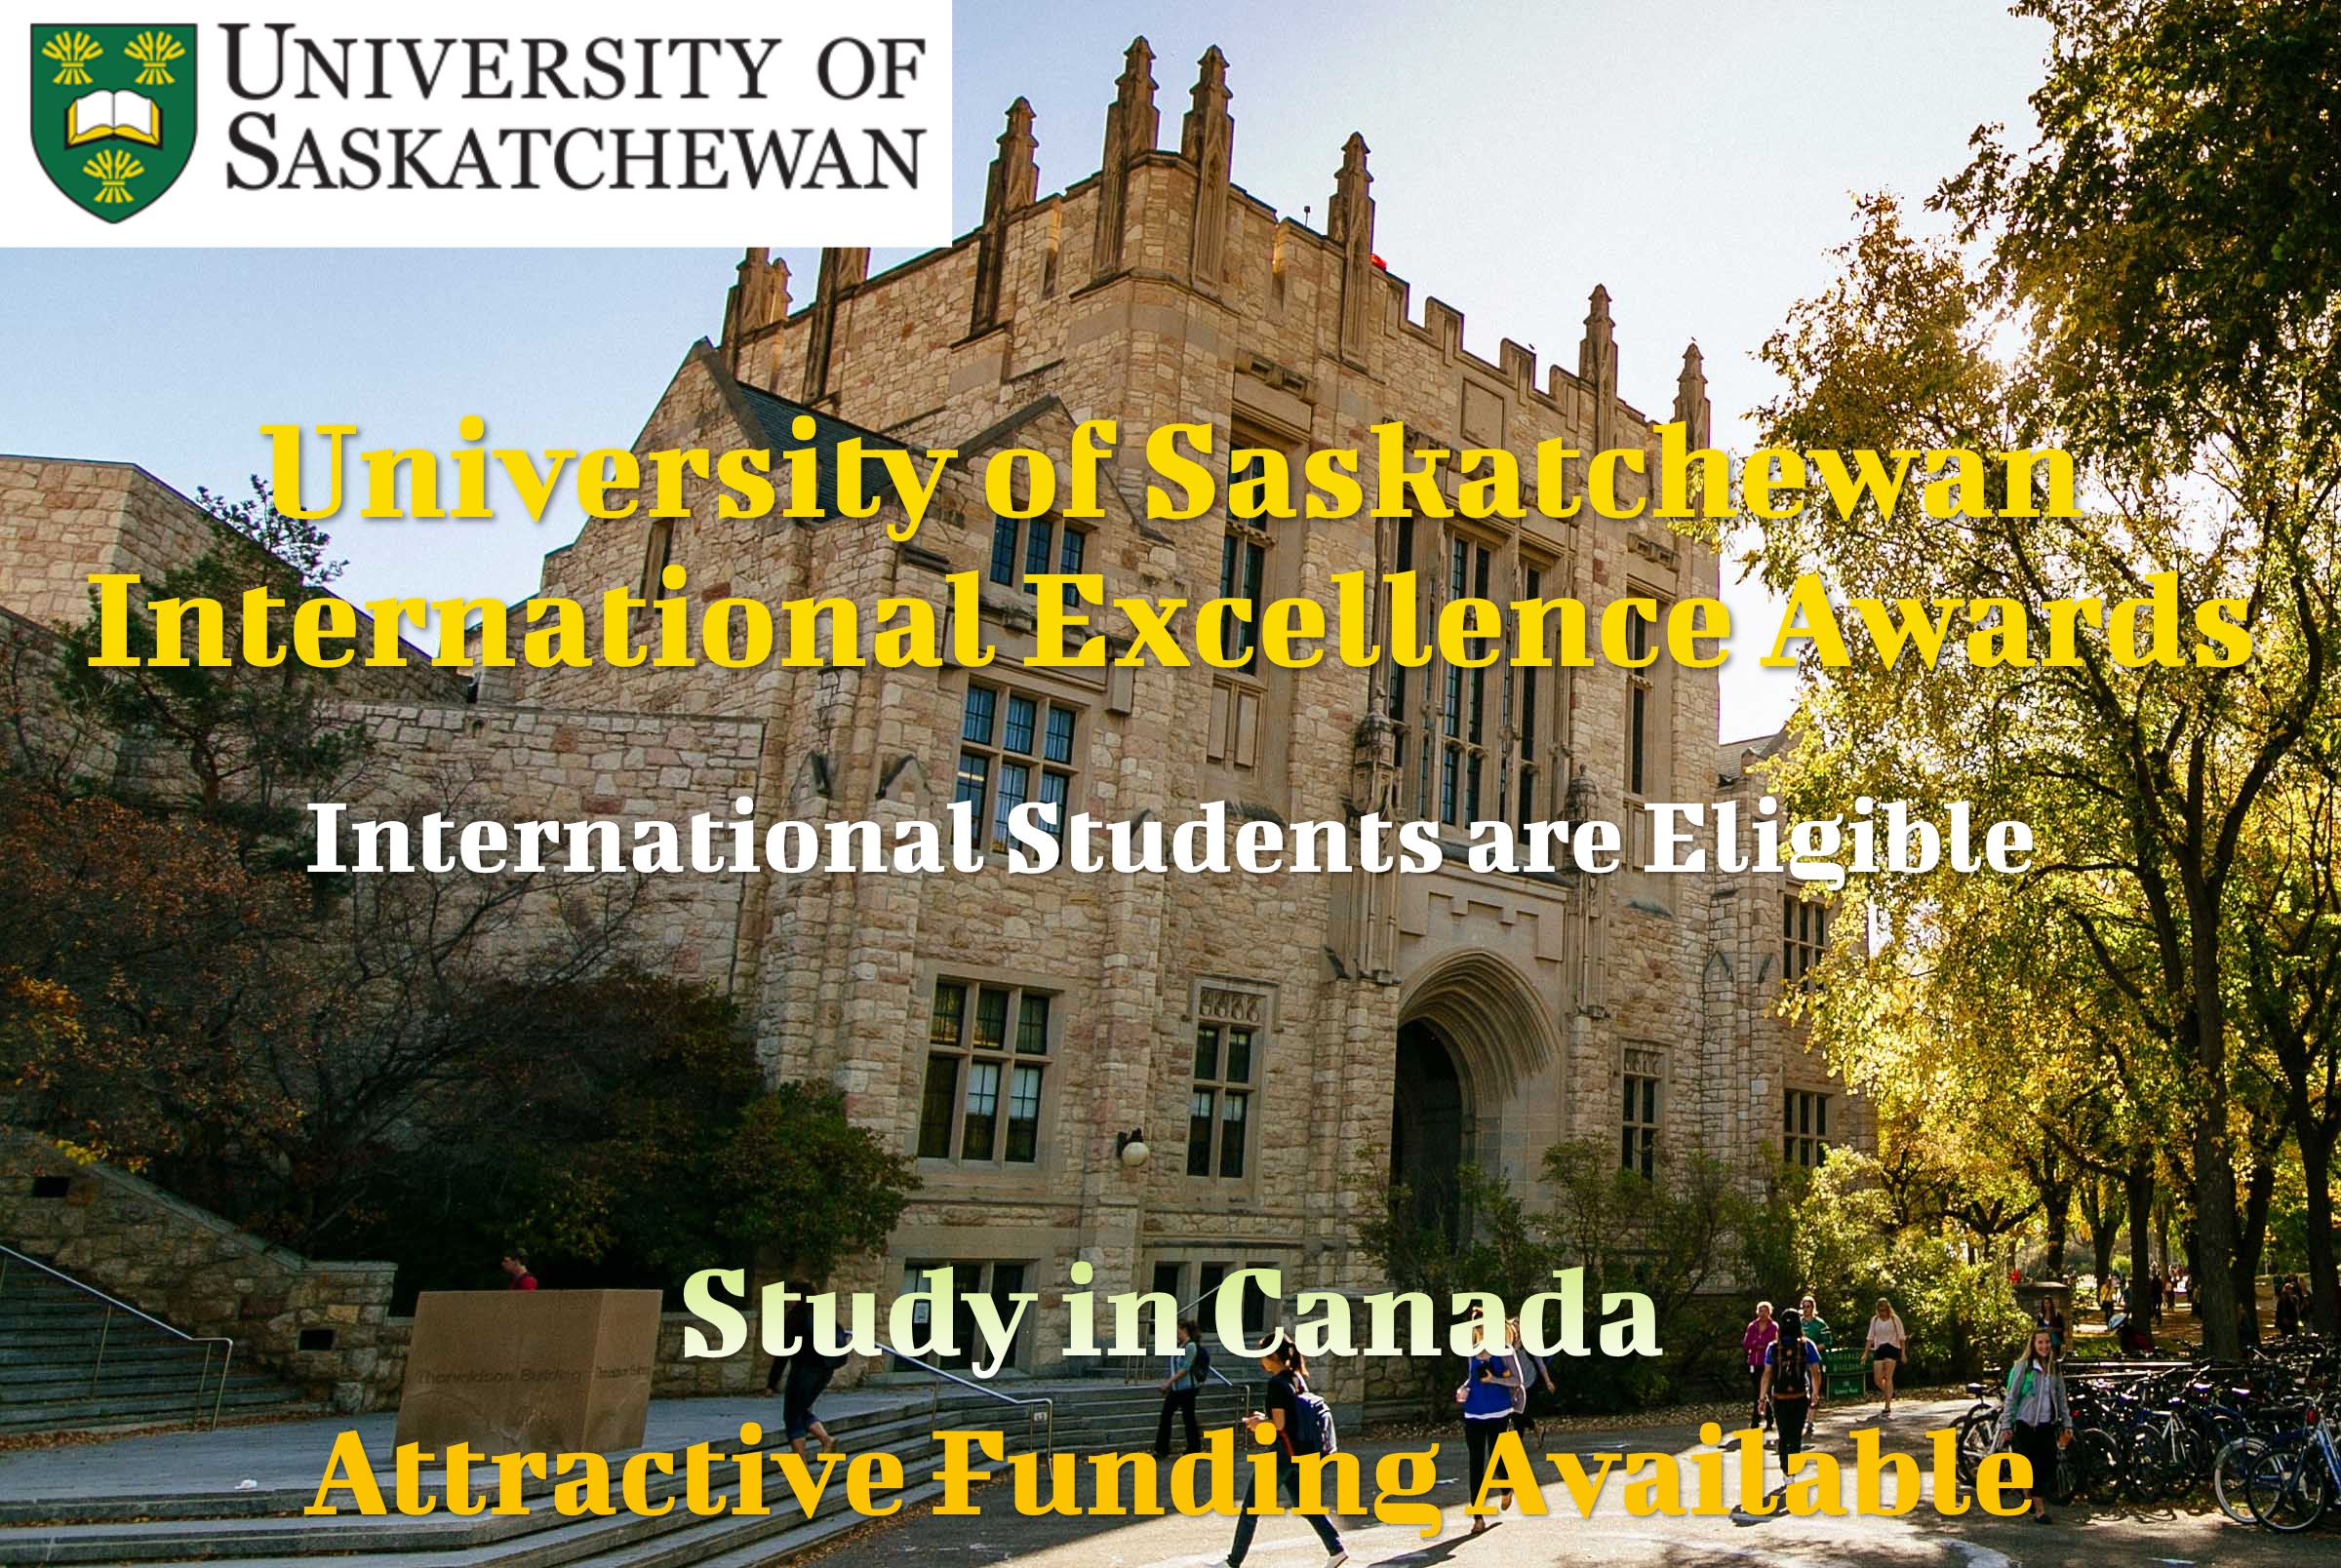 University of Saskatchewan International Excellence Awards